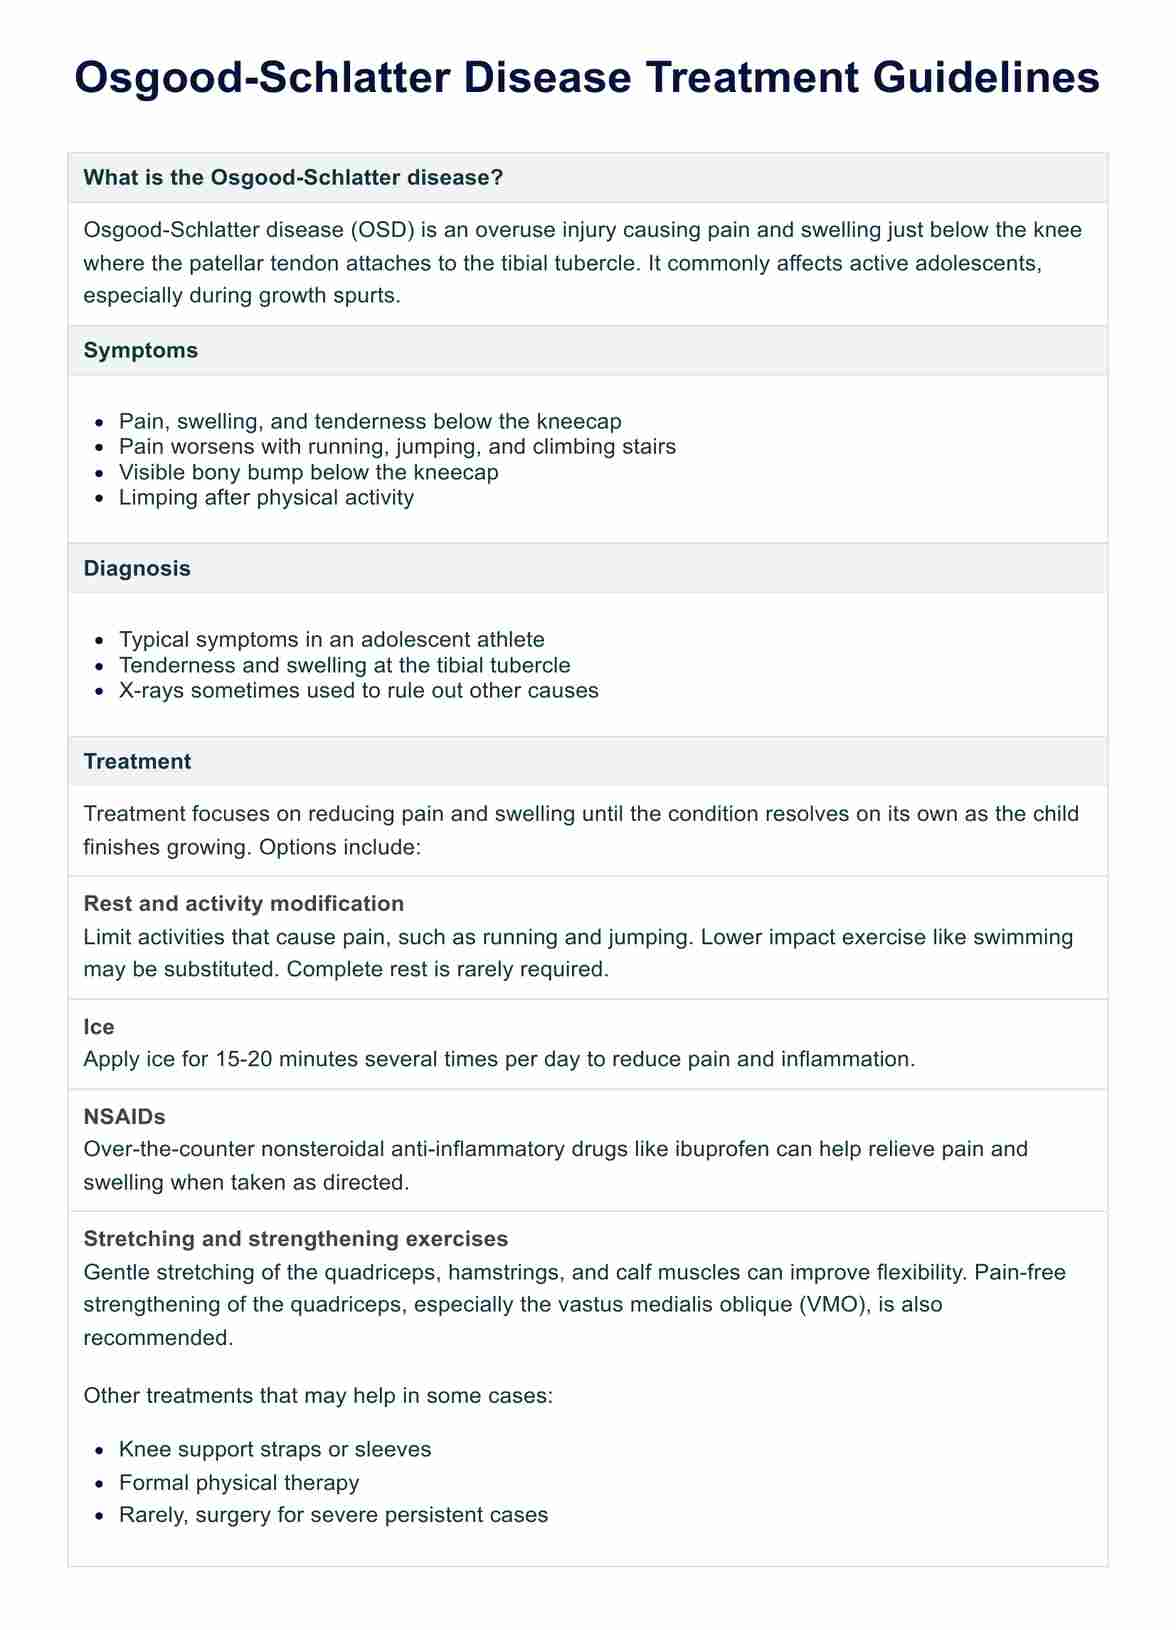 Osgood-Schlatter Disease Treatment Guidelines PDF Example